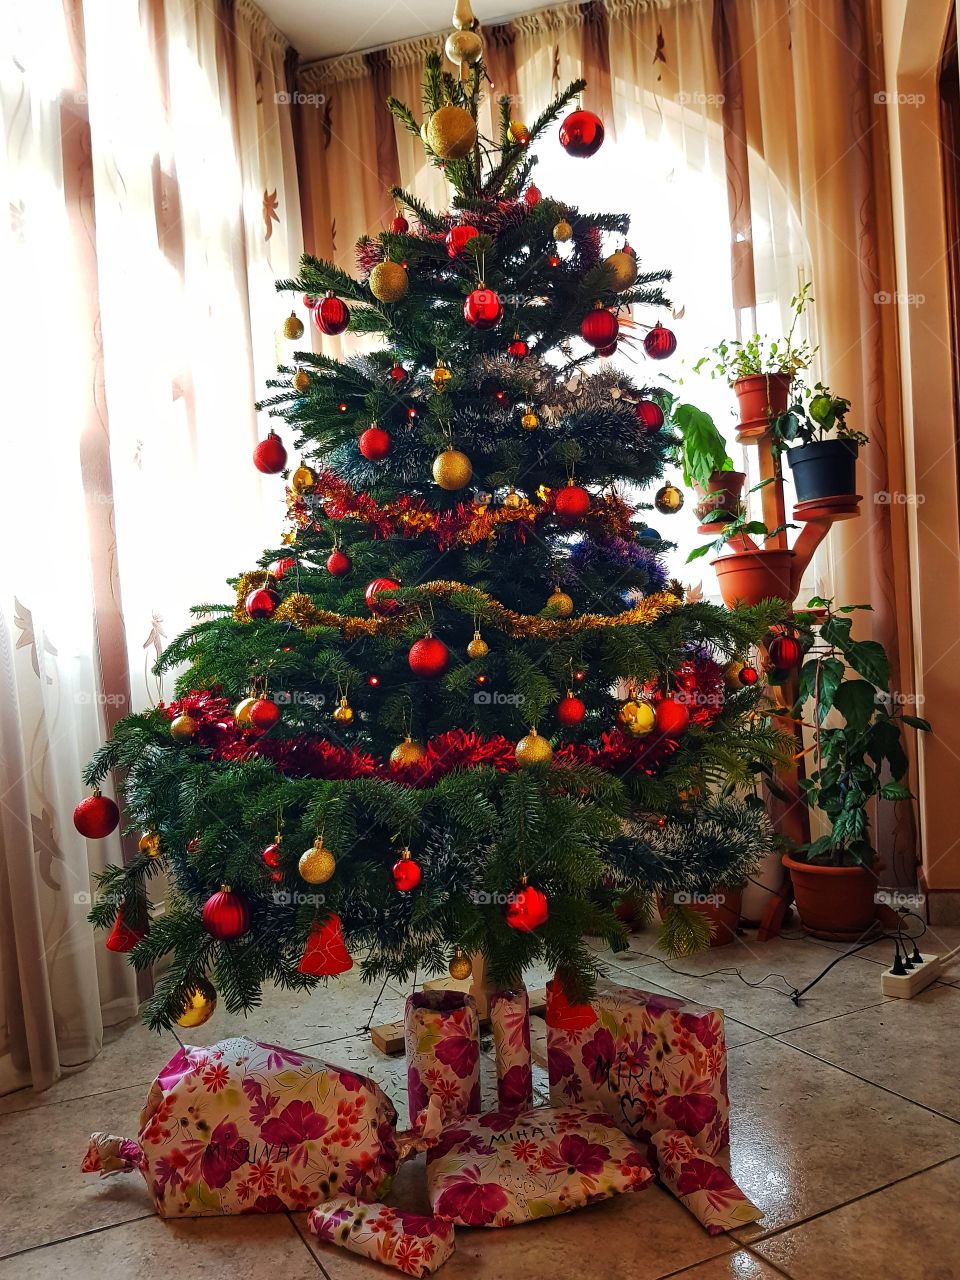 december ,christmas , people ,saturday ,wealth ,snow ,love ,xmas ,merrychristmas ,christmastime ,holiday ,holidays ,christmastree,christmasiscoming , like ,fun ,santa ,santaclaus ,christmaslights ,january ,tree ,happyholidays ,noel ,follow ,festive